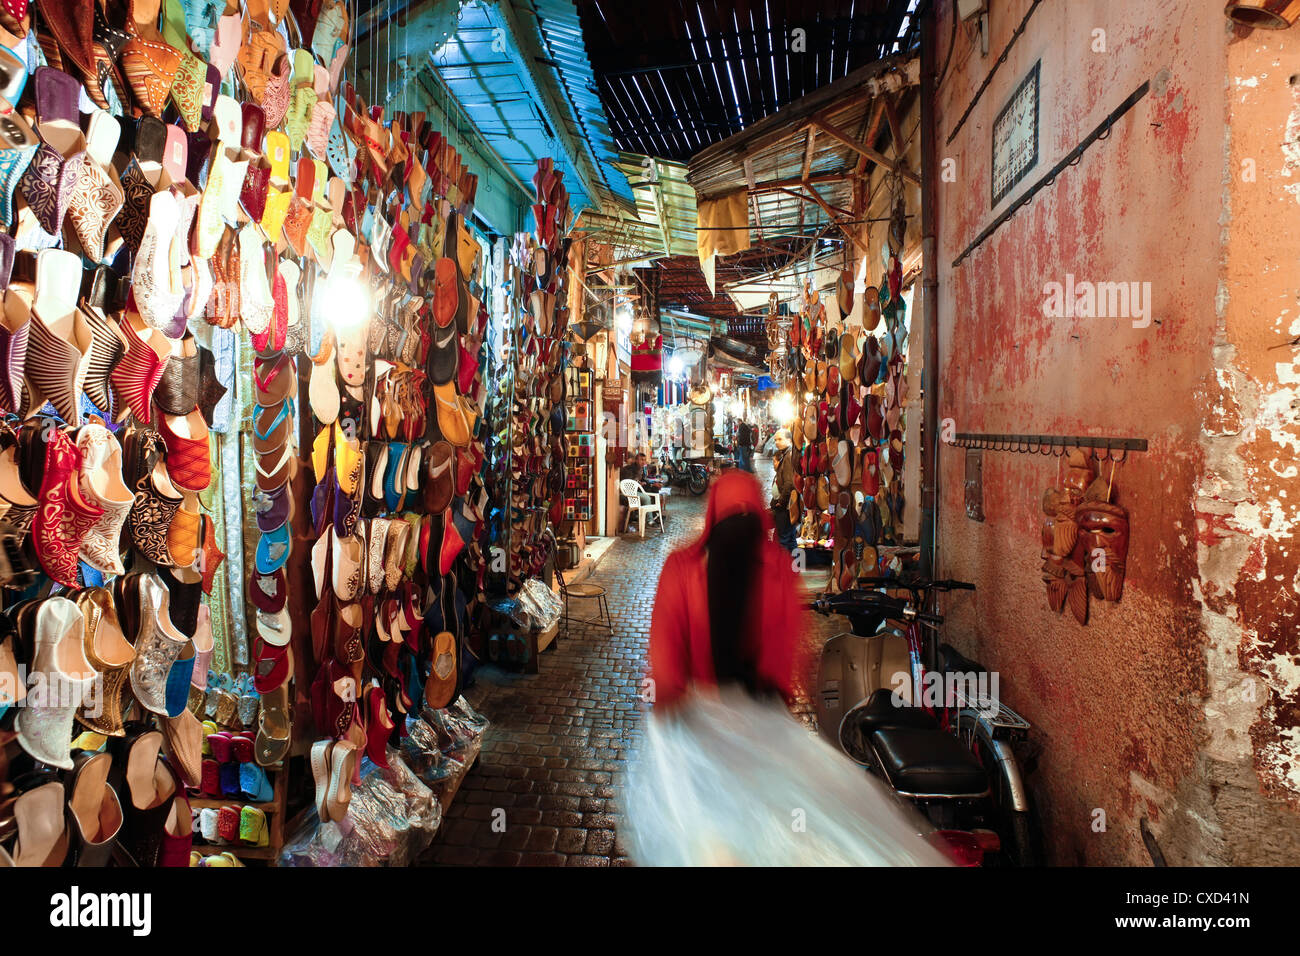 Im Souk, Marrakesch, Marokko, Nordafrika, Afrika Stockfoto